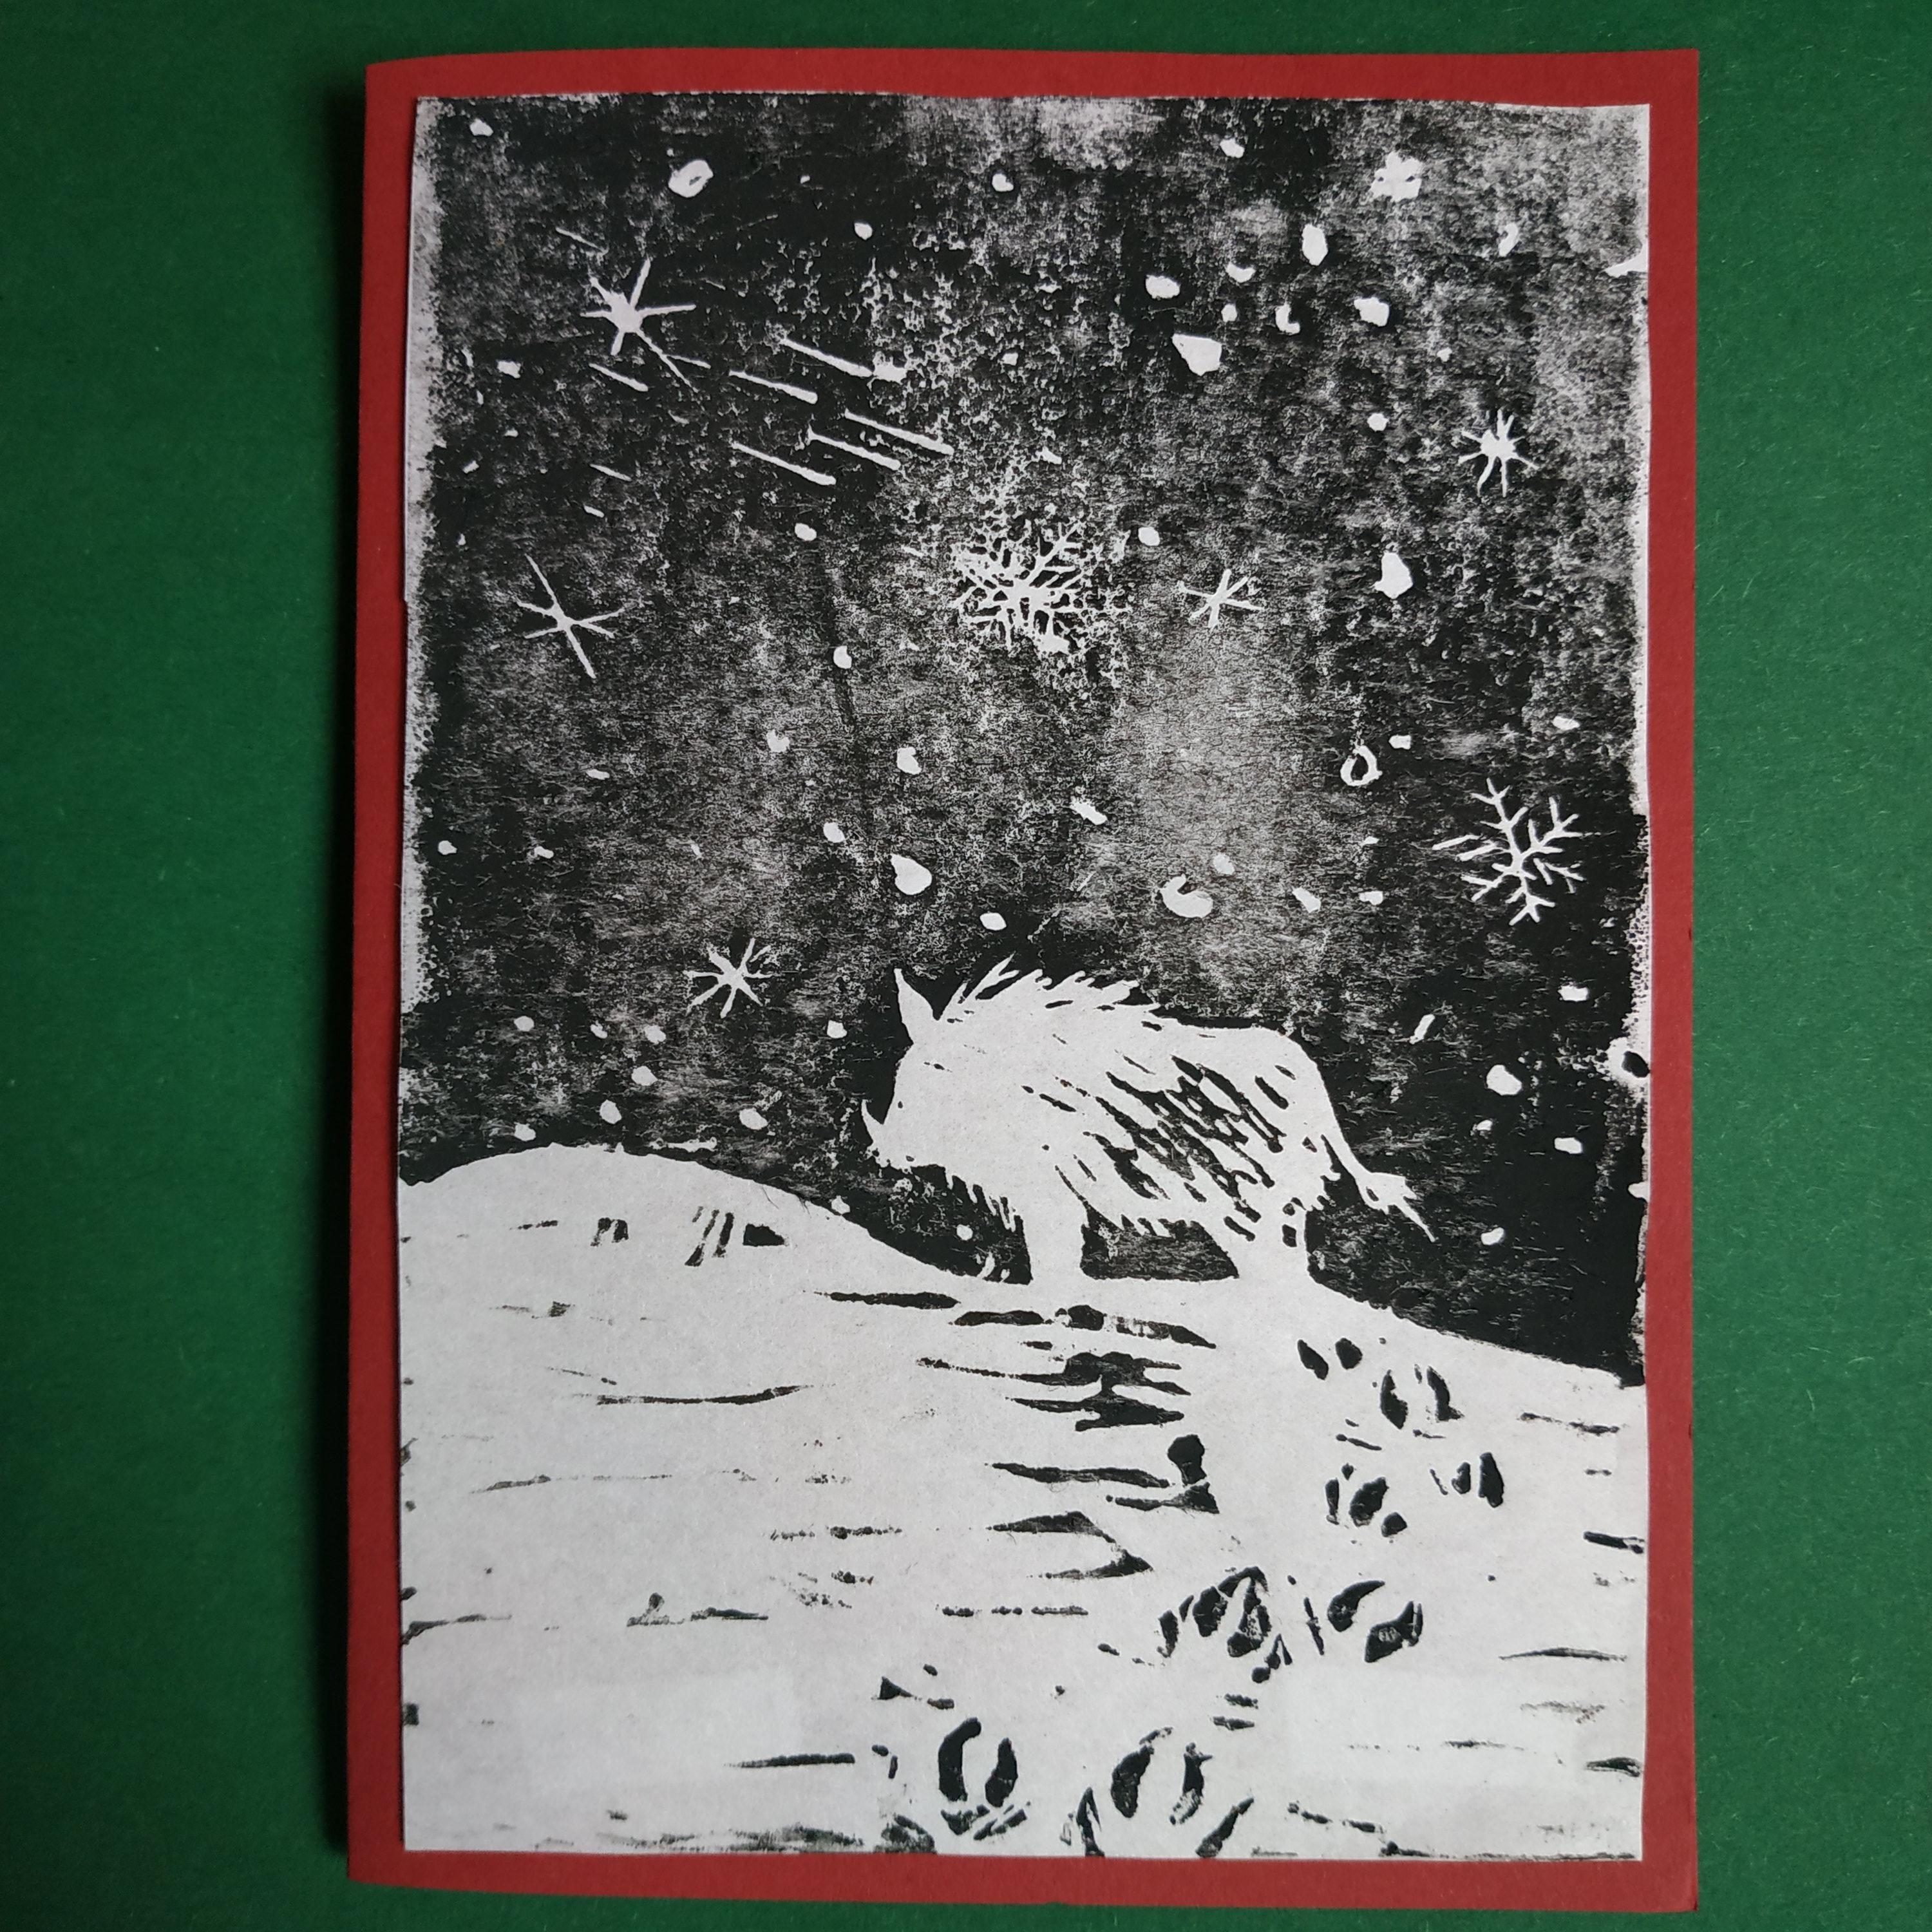 Wilde Schweihnachten an alle. #diychristmascard #winterseason #linocut